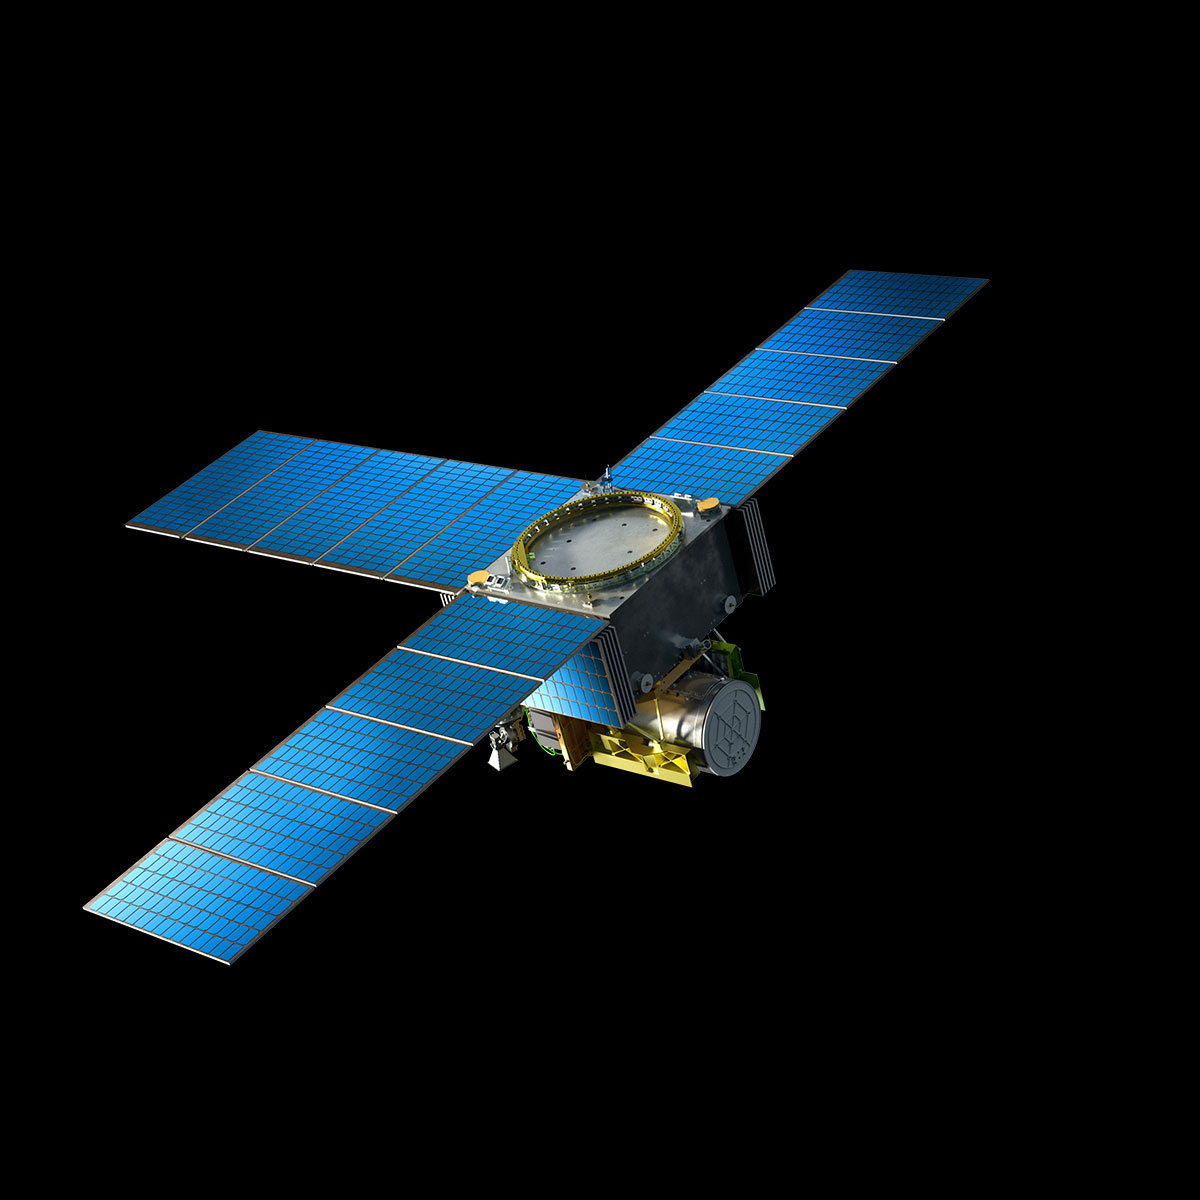 General Atomics’ Multi-Angle Imager for Aerosols (MAIA) instrument.